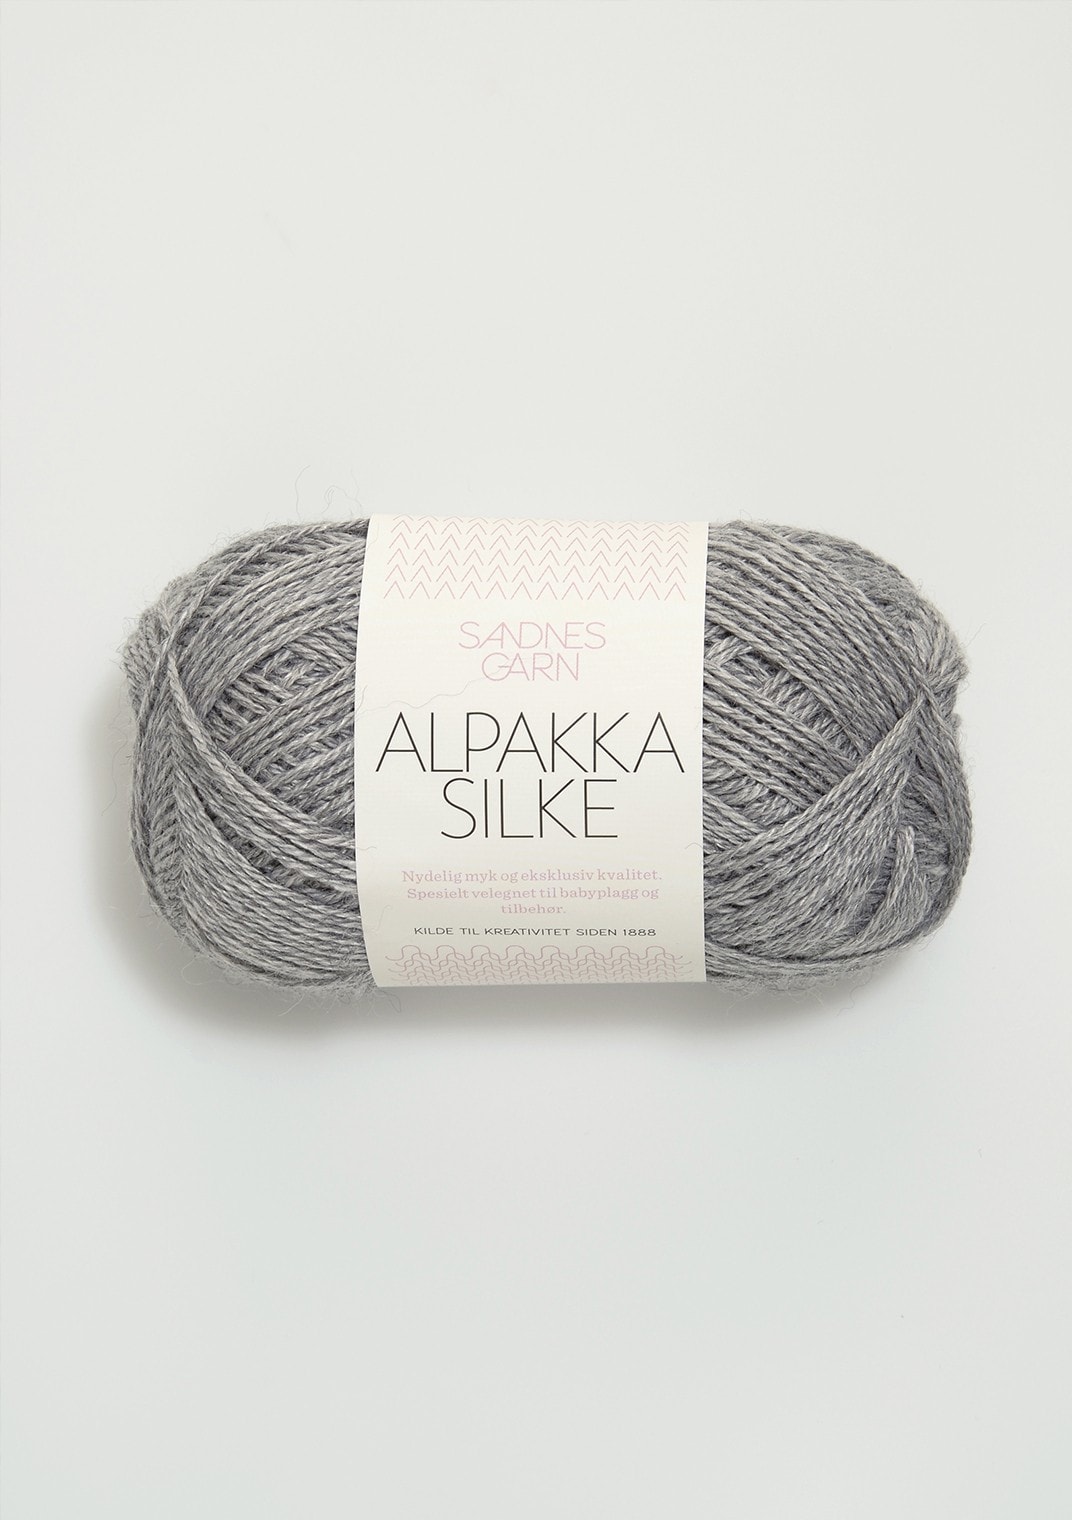 så meget uheldigvis kan opfattes ALPAKKA SILKE (Alpaca Silk) by Sandnes Garn